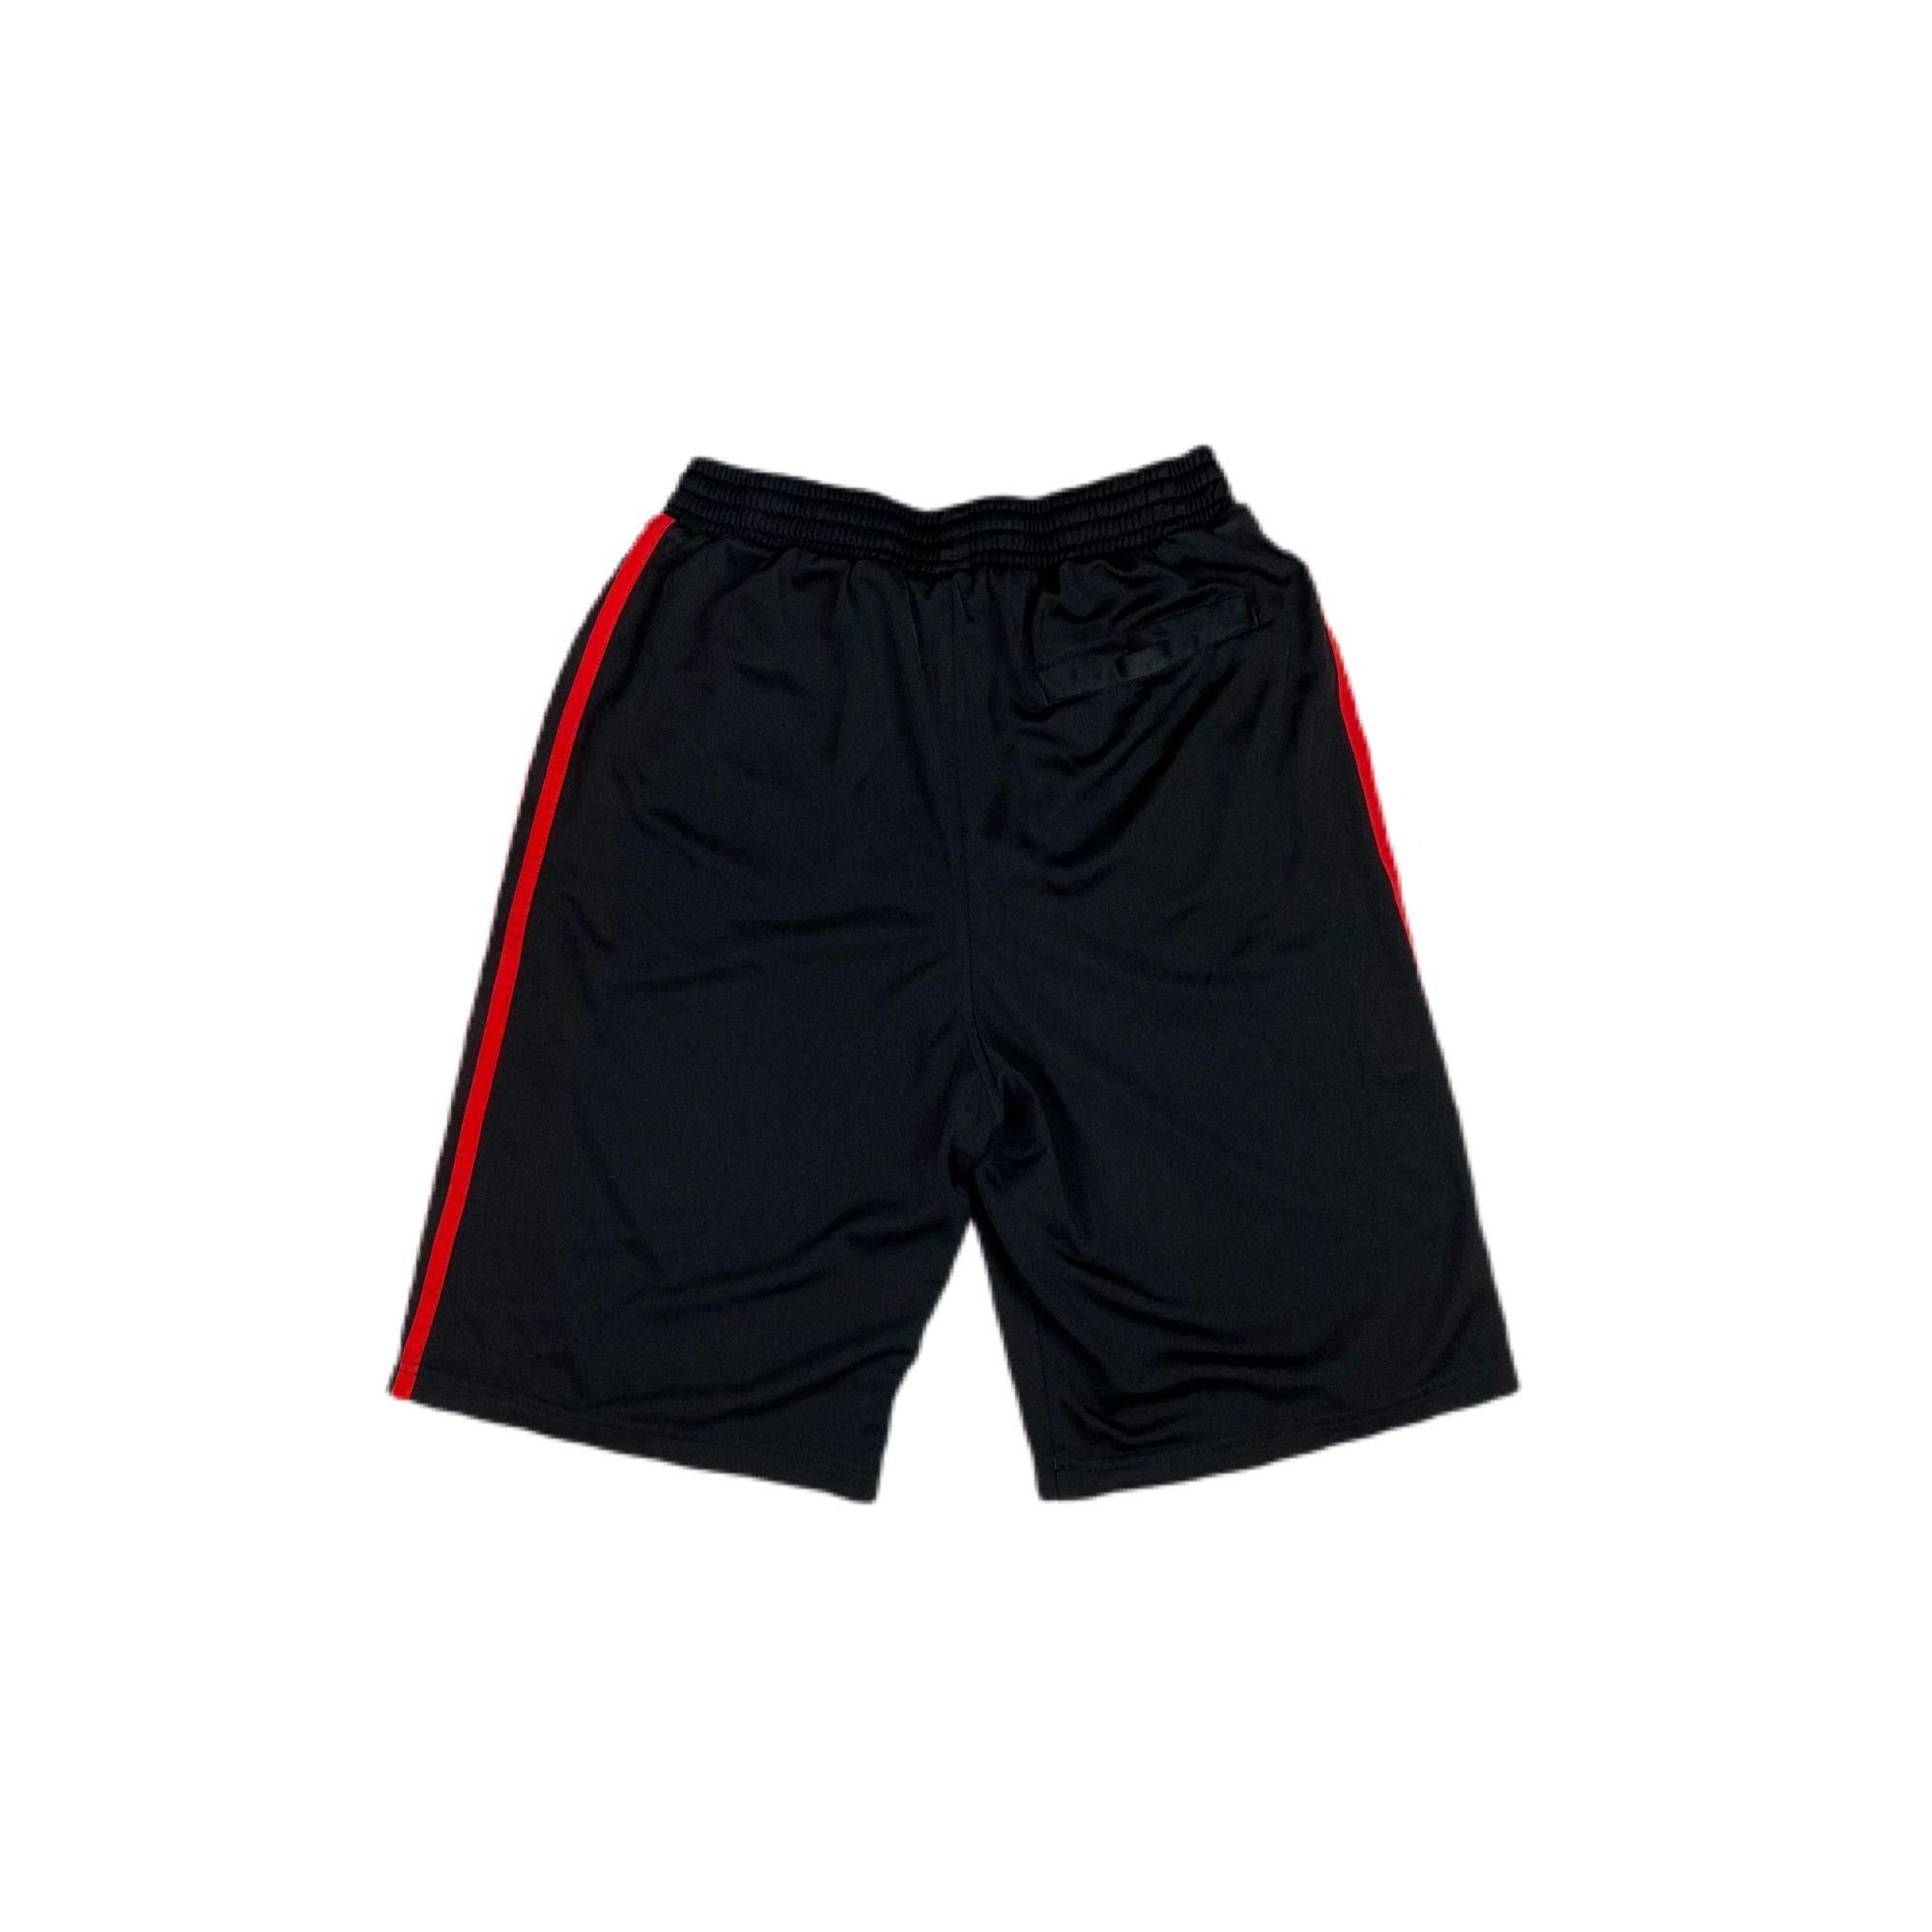 Vintage Adidas Basketball Shorts M Size US 26 / EU 42 - 2 Preview